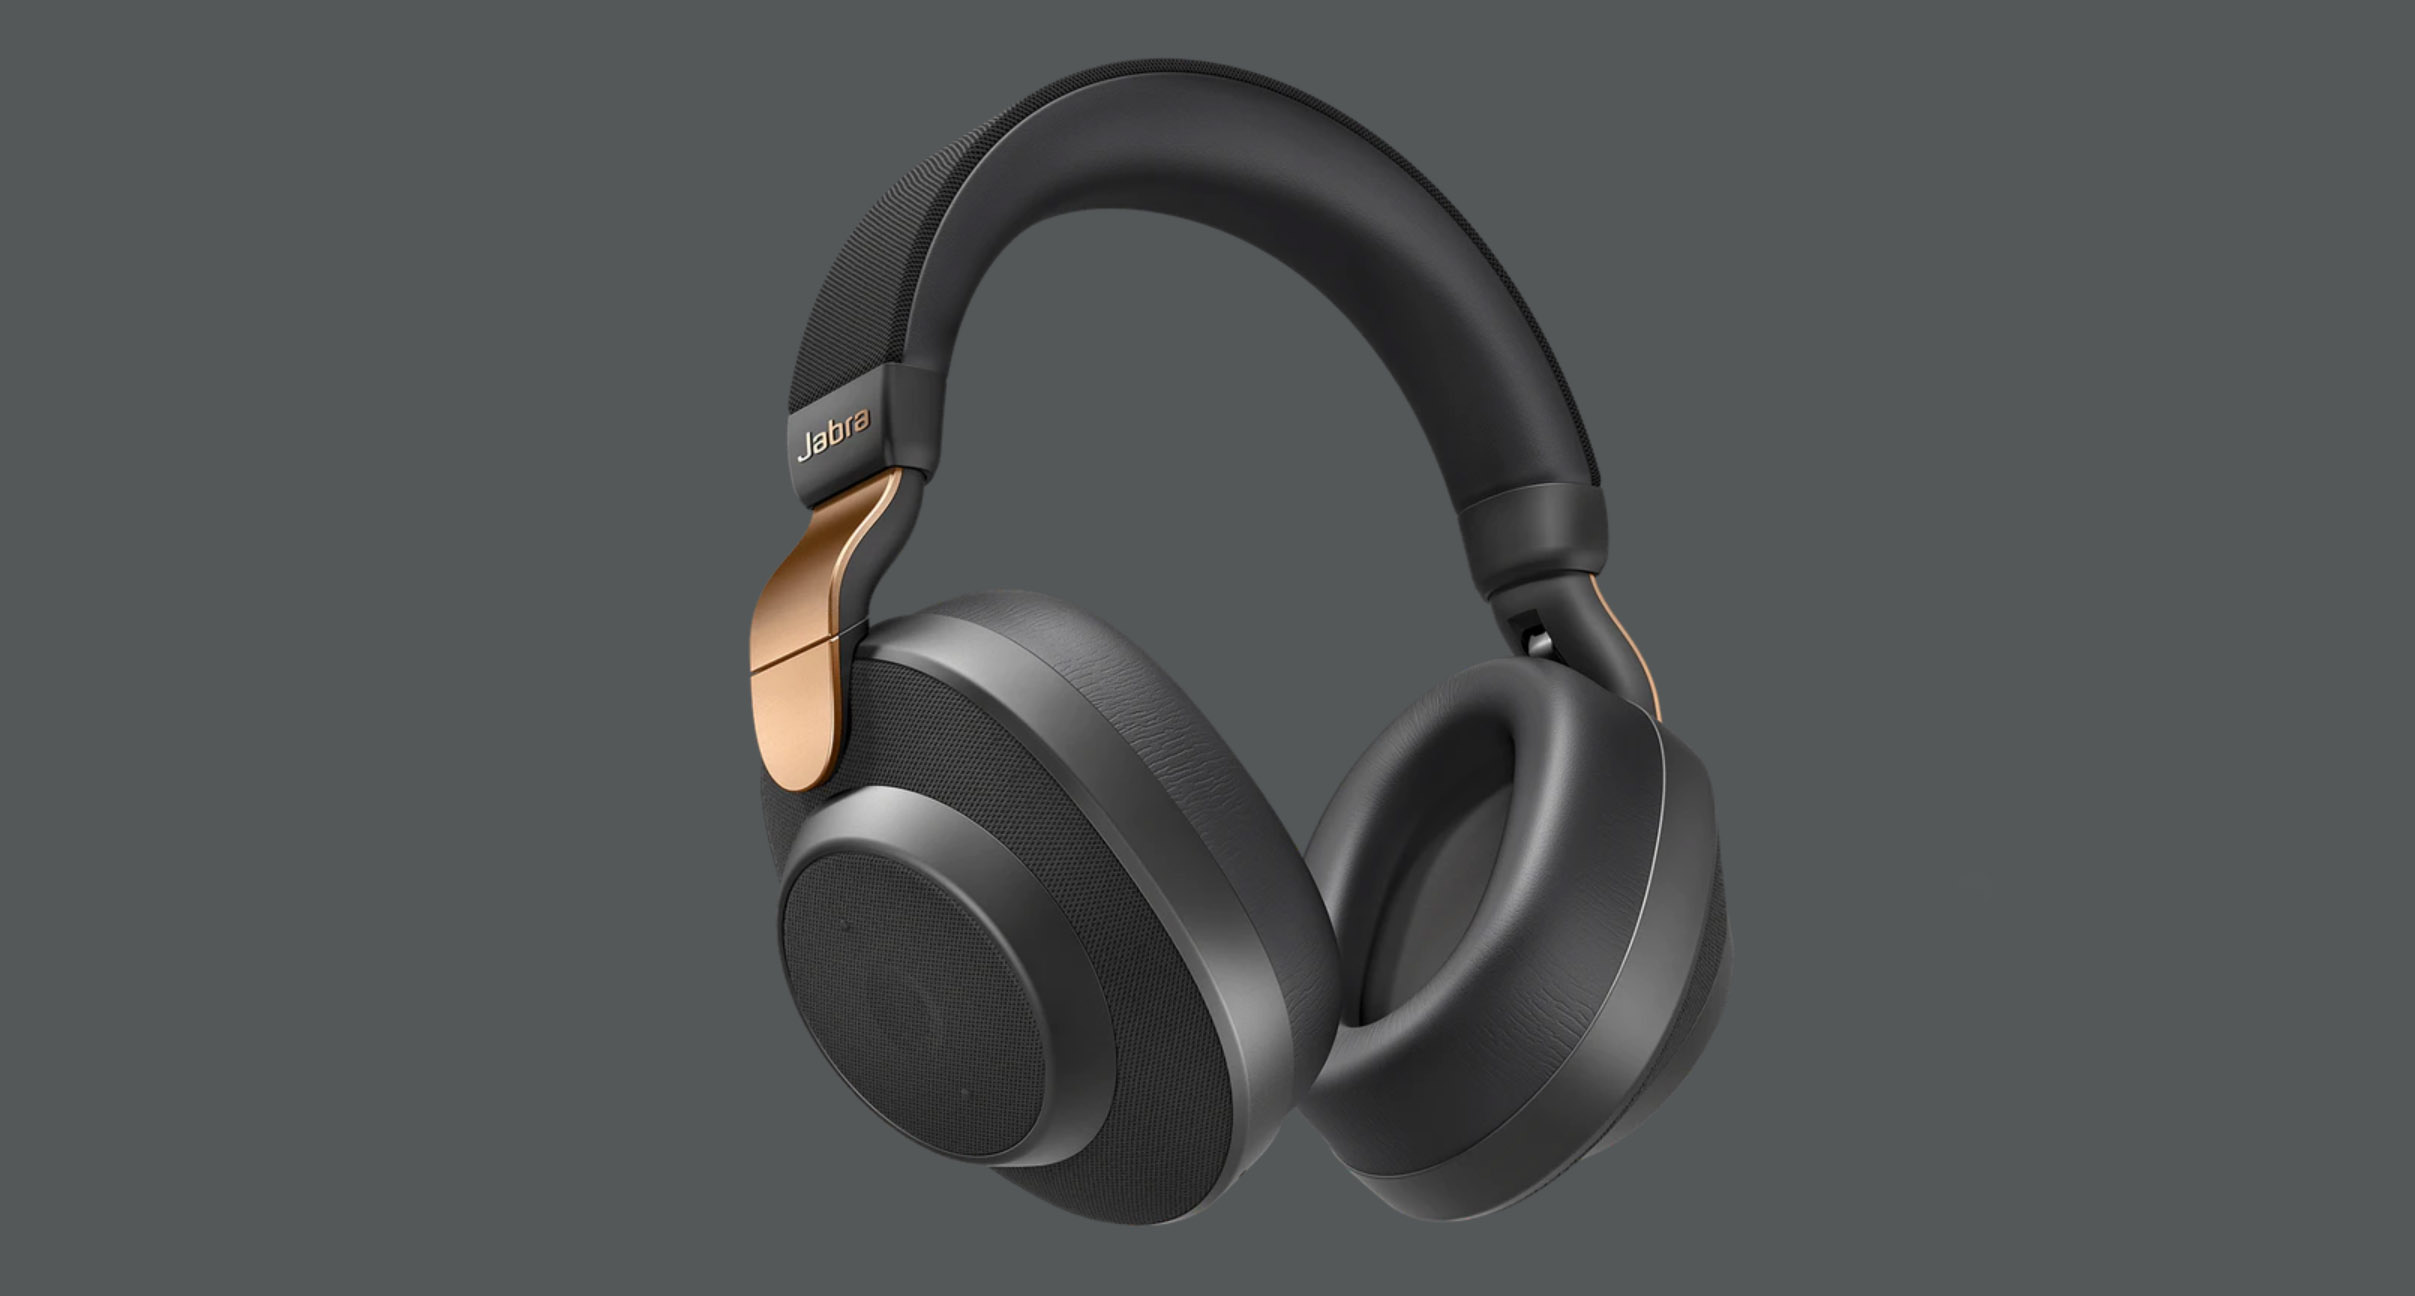 Jabra's best noise-canceling headphones are $100 off - Phandroid